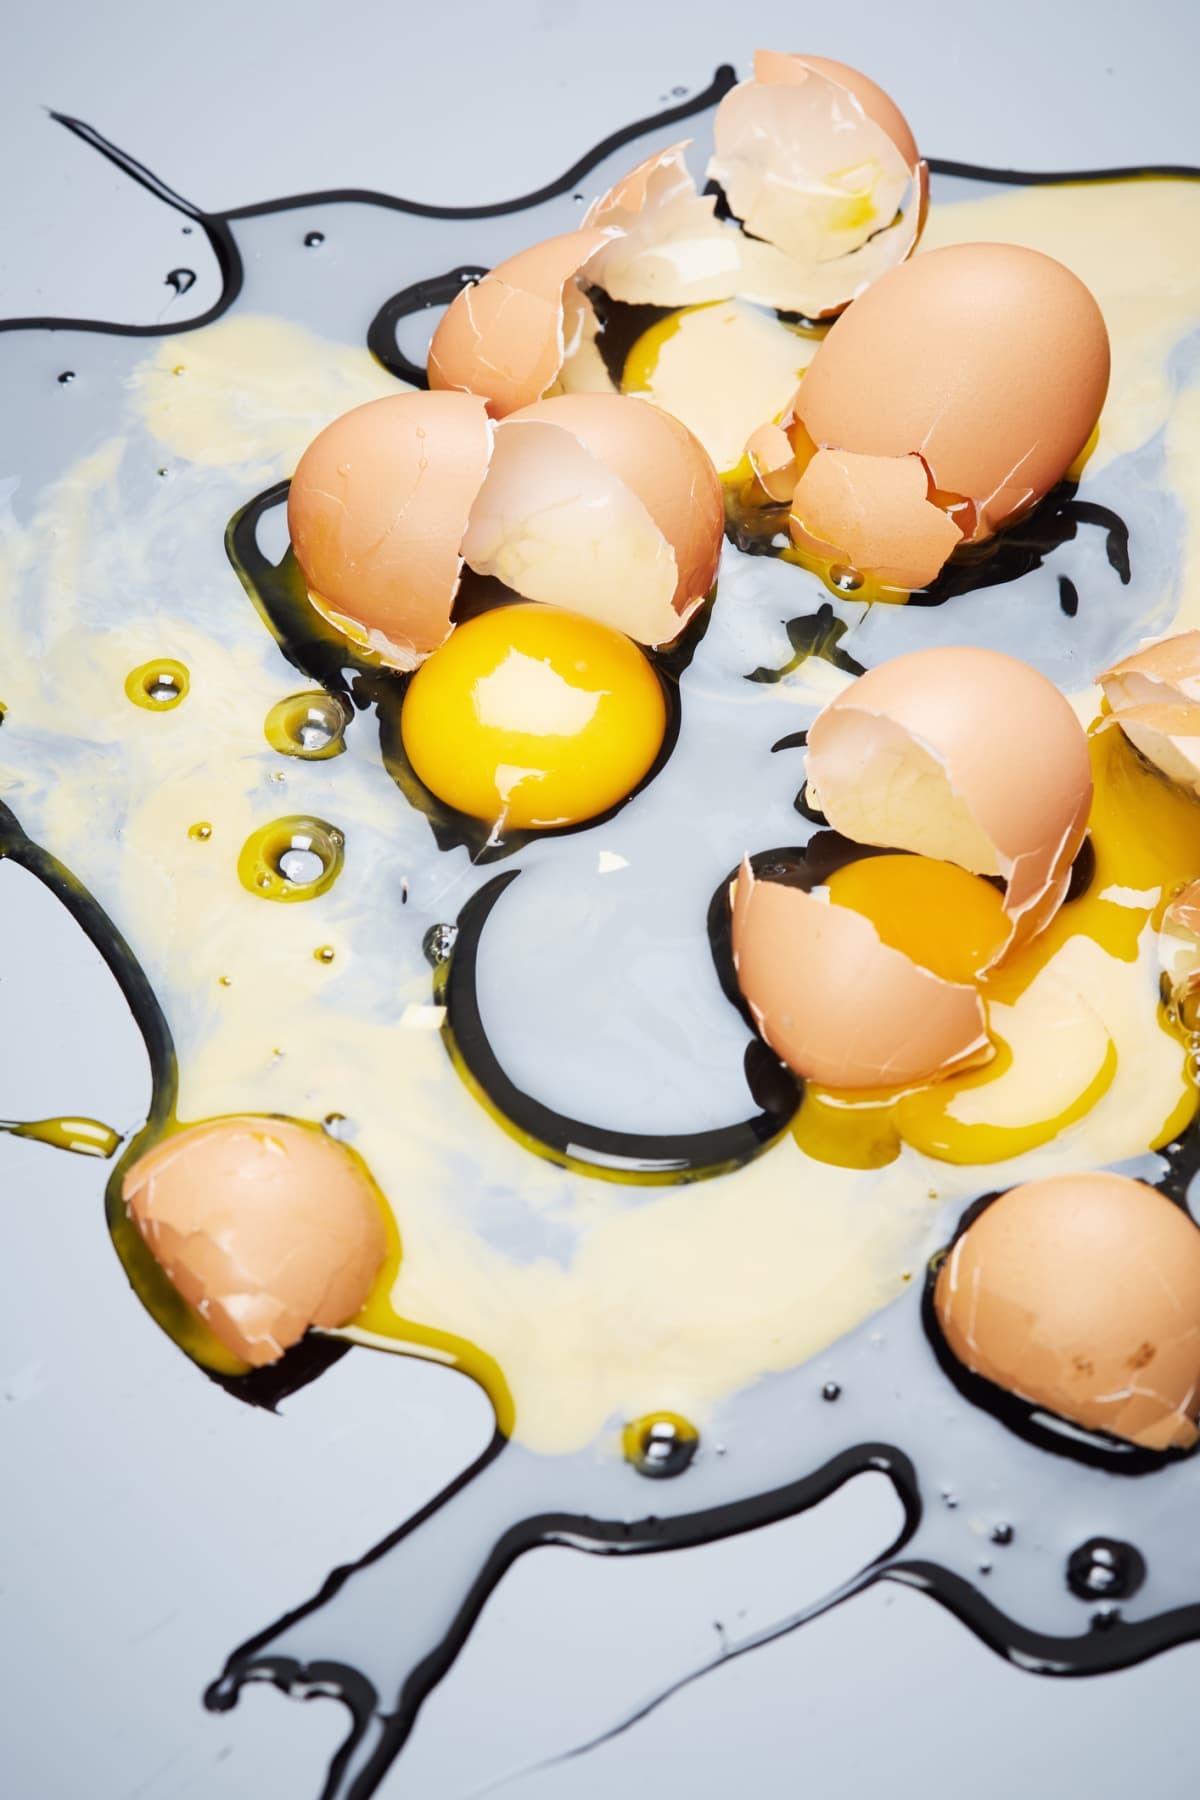 Many eggs lie broken on a shiny surface.